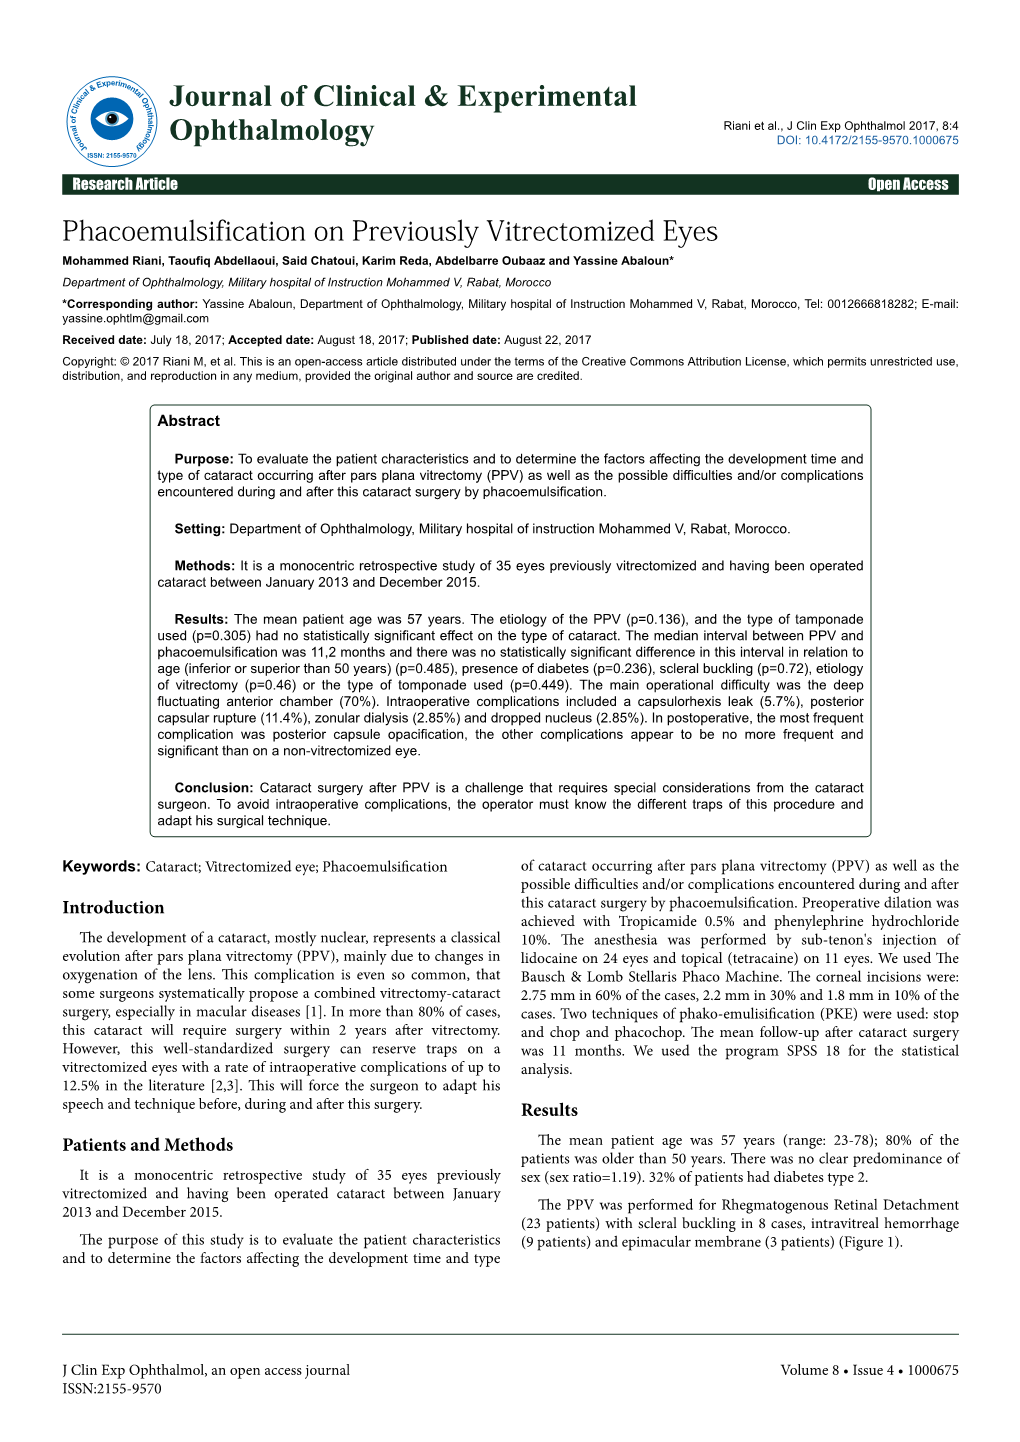 Phacoemulsification on Previously Vitrectomized Eyes